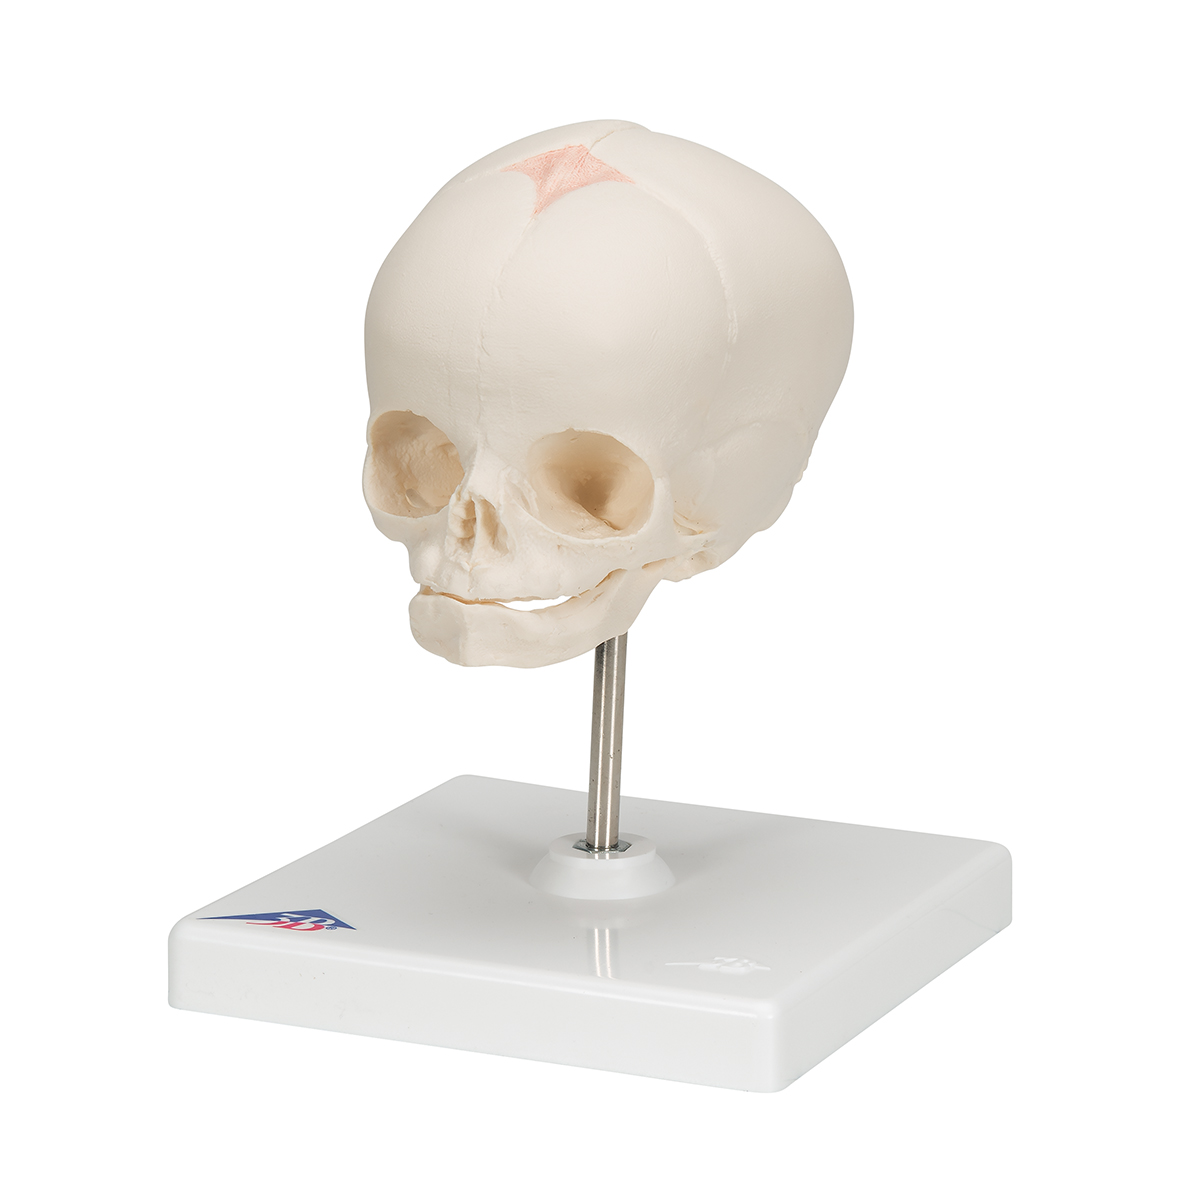 PVC Material Human Anatomy Science Models 30Th Week of Pregnancy Naturally Size Fetal Skull Anatomical Model for Medical Educatioanal ZLF Foetal Skull Model 